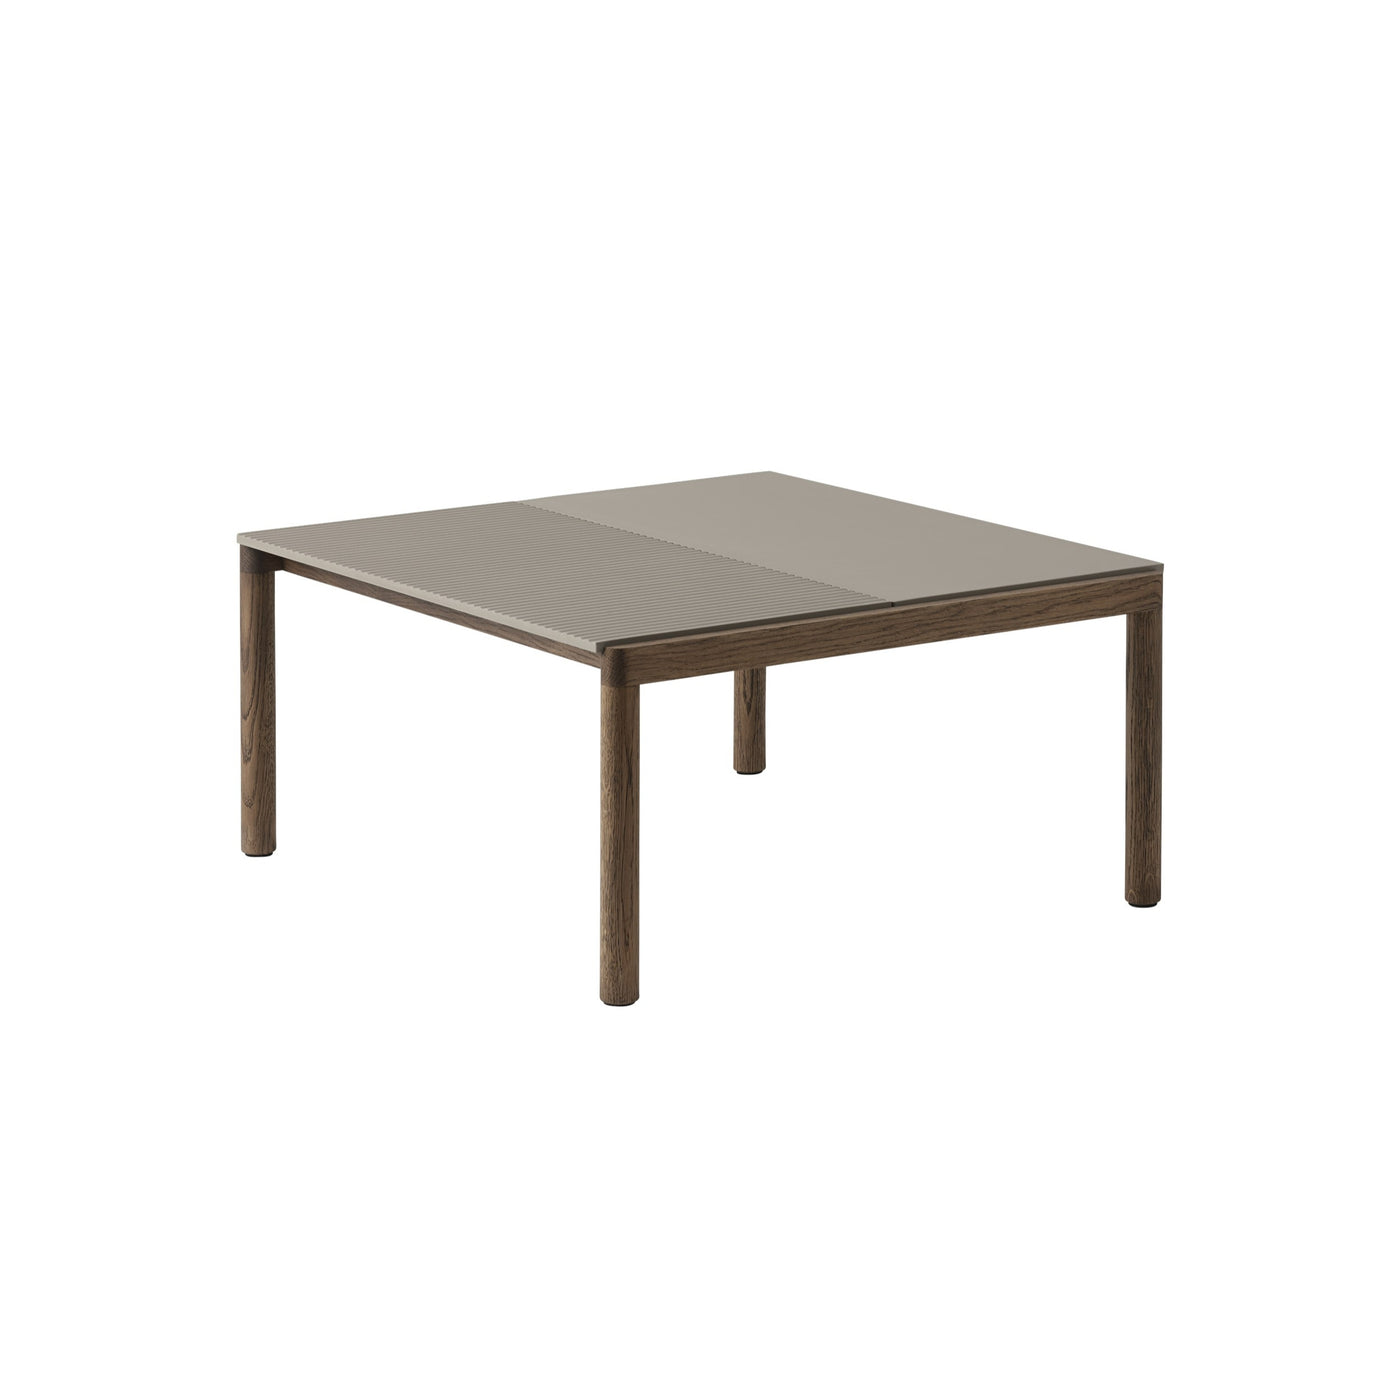 Muuto Couple Coffee Table 1 plain 1 wavy tiles, taupe with dark oiled oak base. #style_1-plain-1-wavy